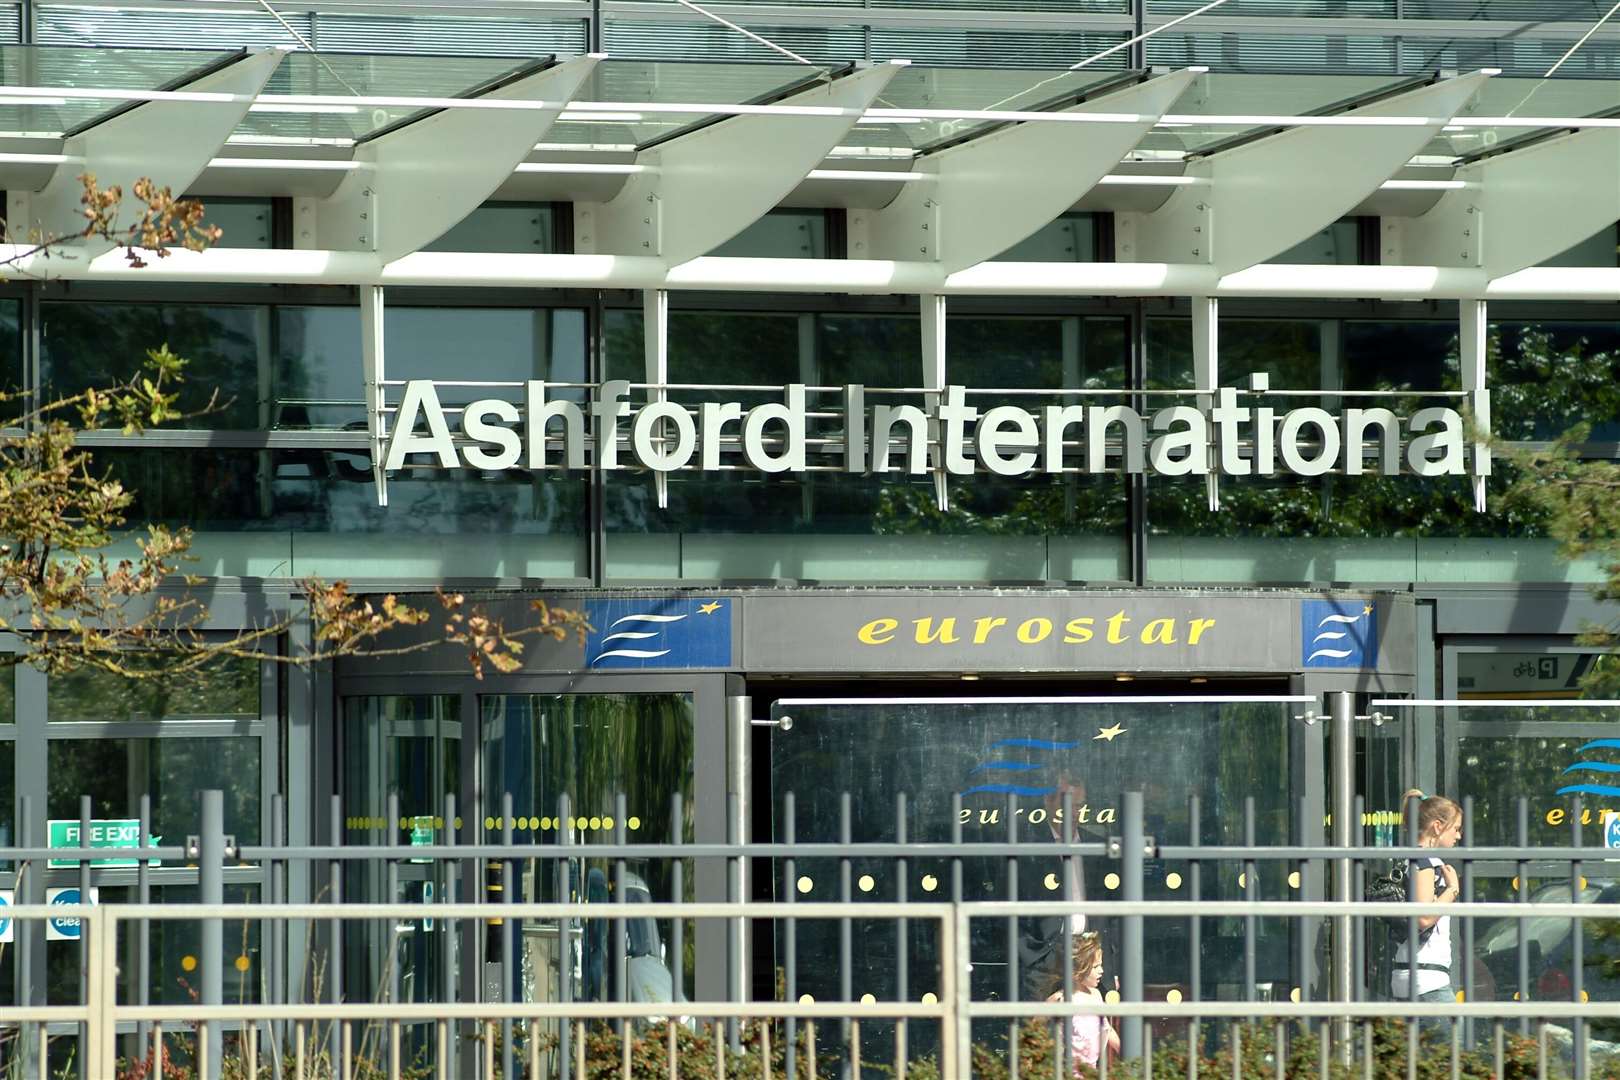 Gary Smith was arrested at Ashford International Station